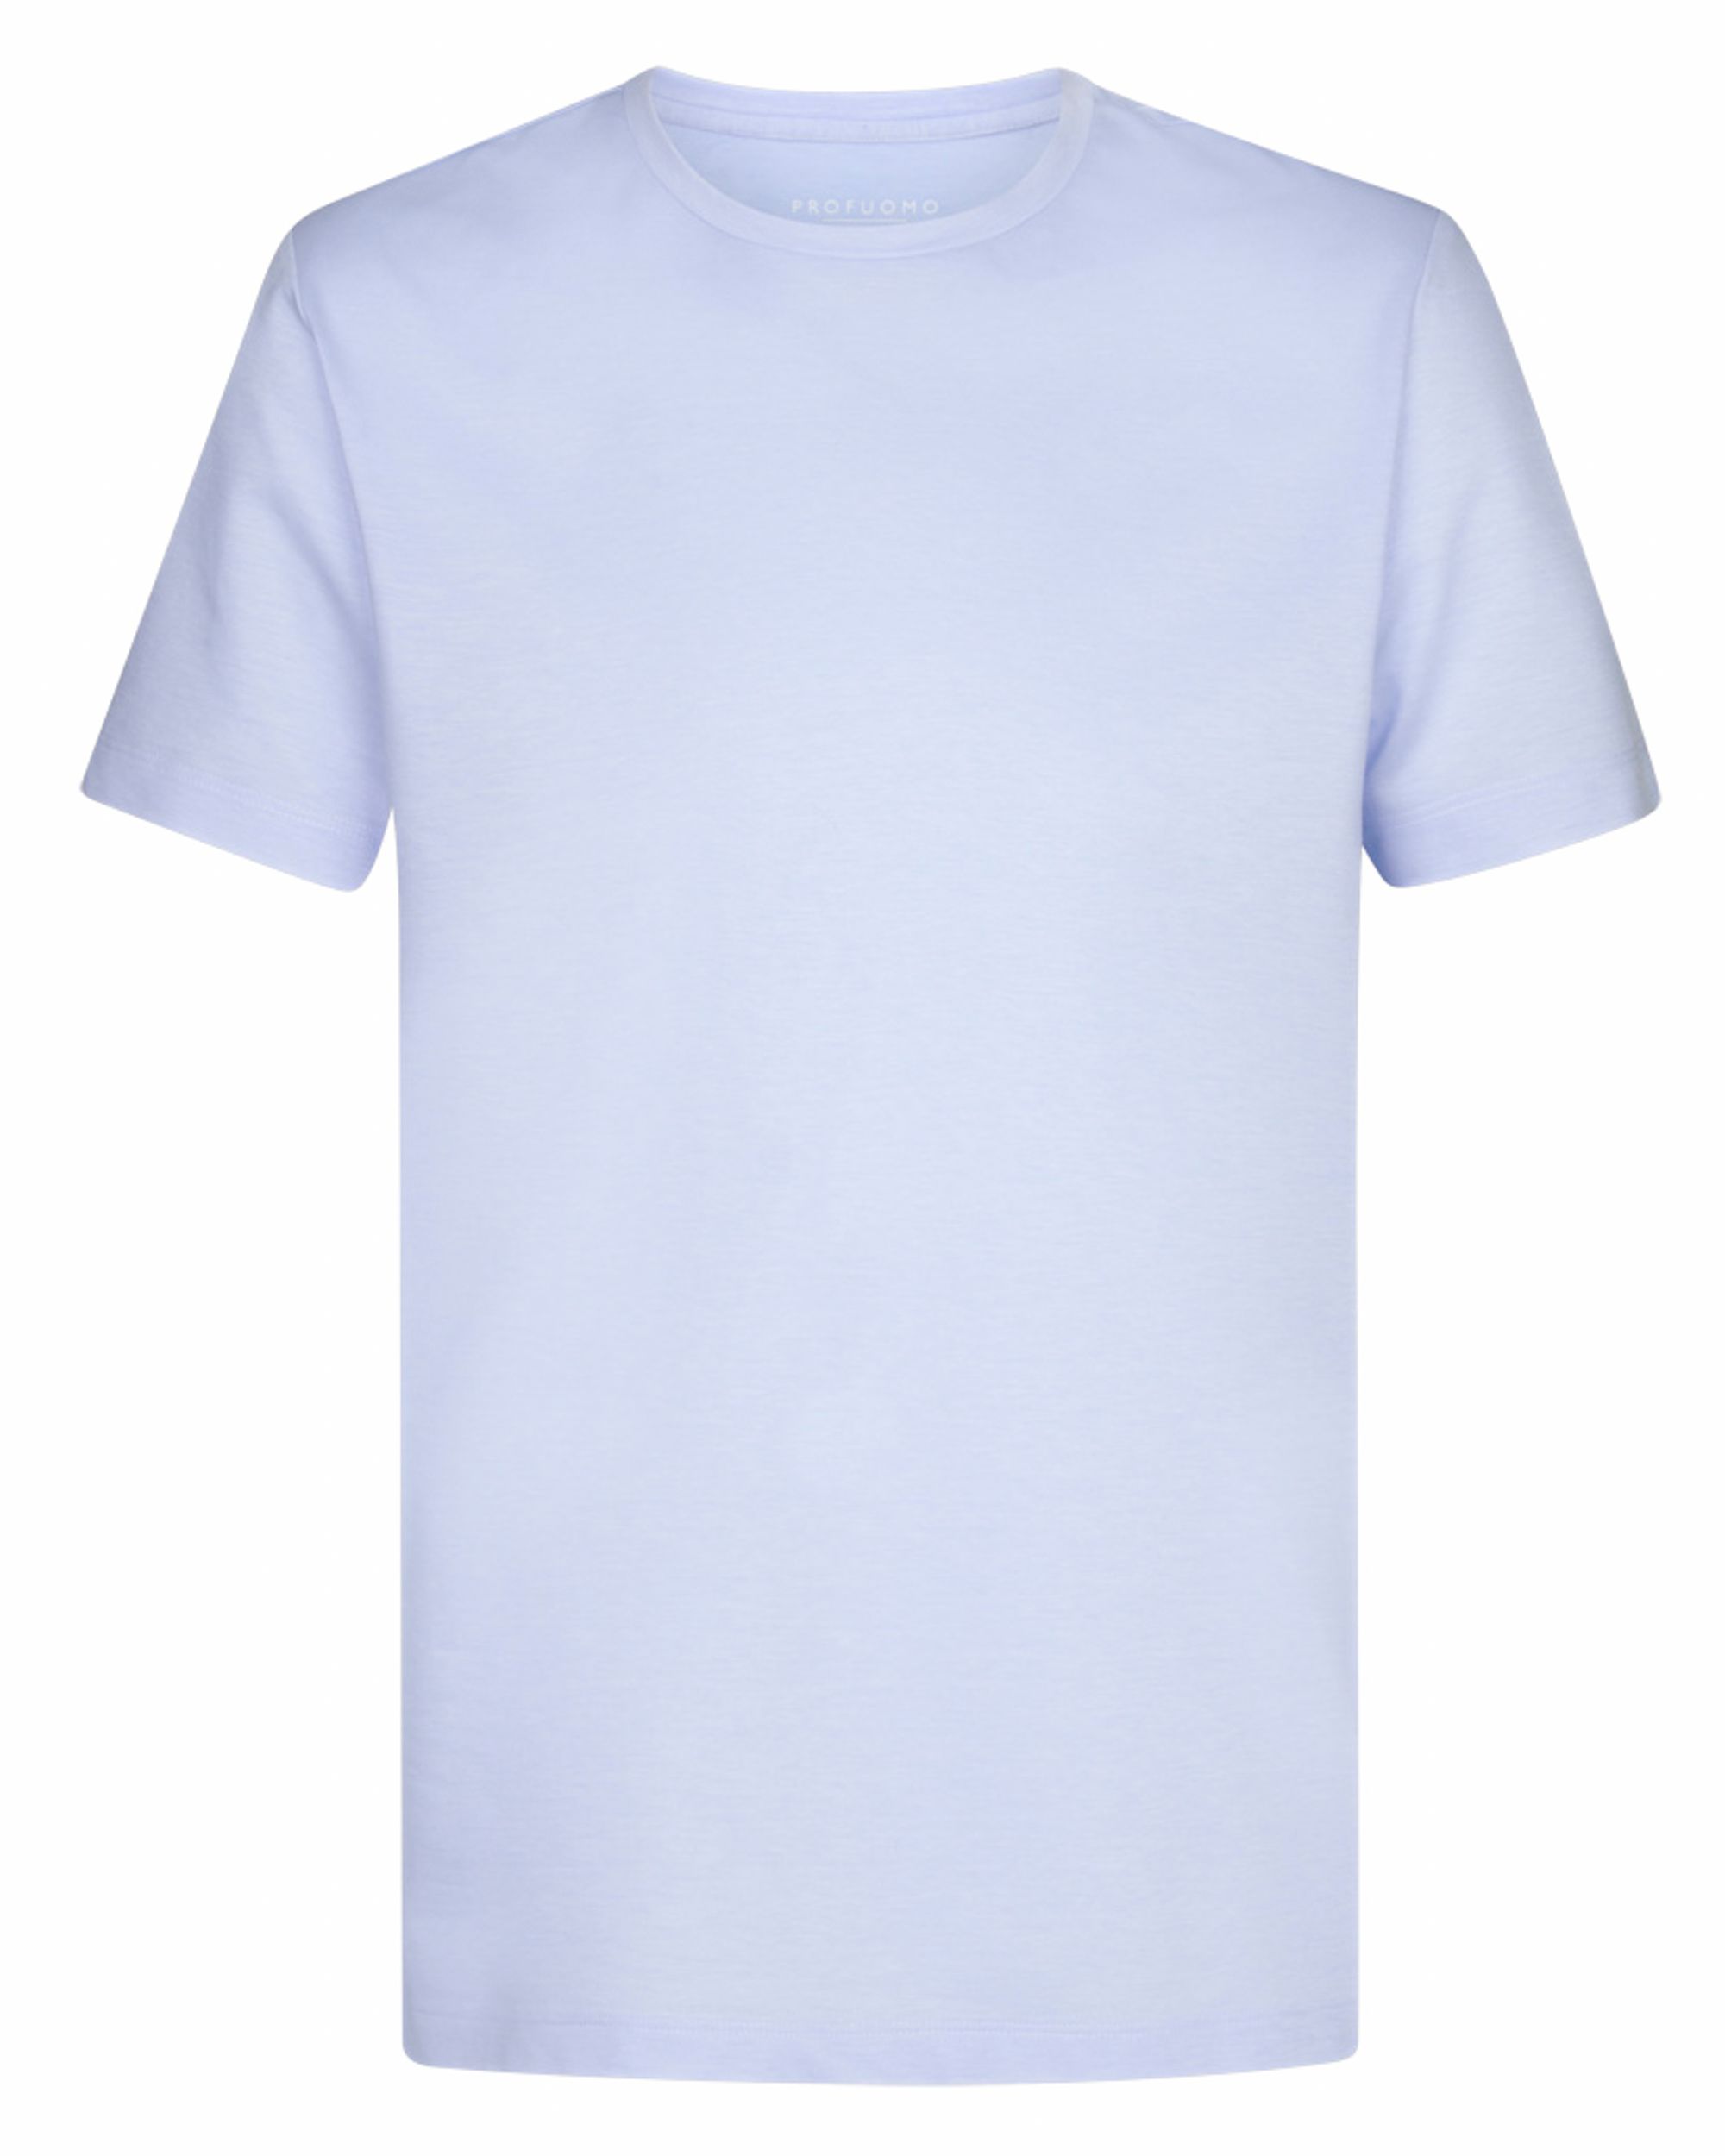 Profuomo T-shirt KM Licht blauw 093977-001-L